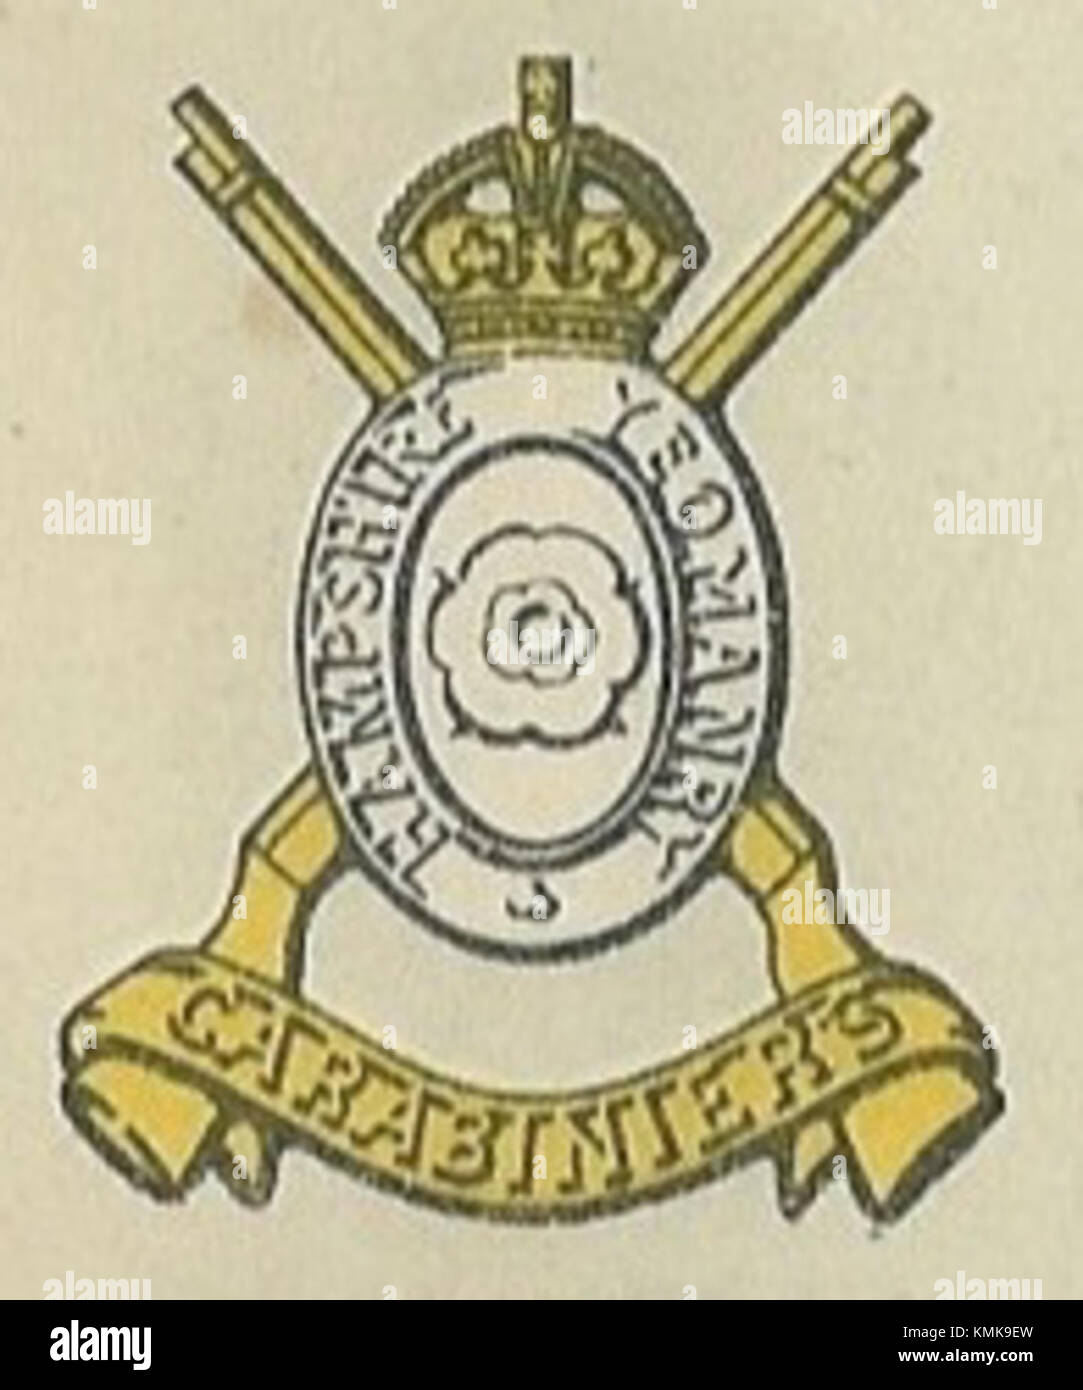 Hampshire Carabiniers badge Stock Photo